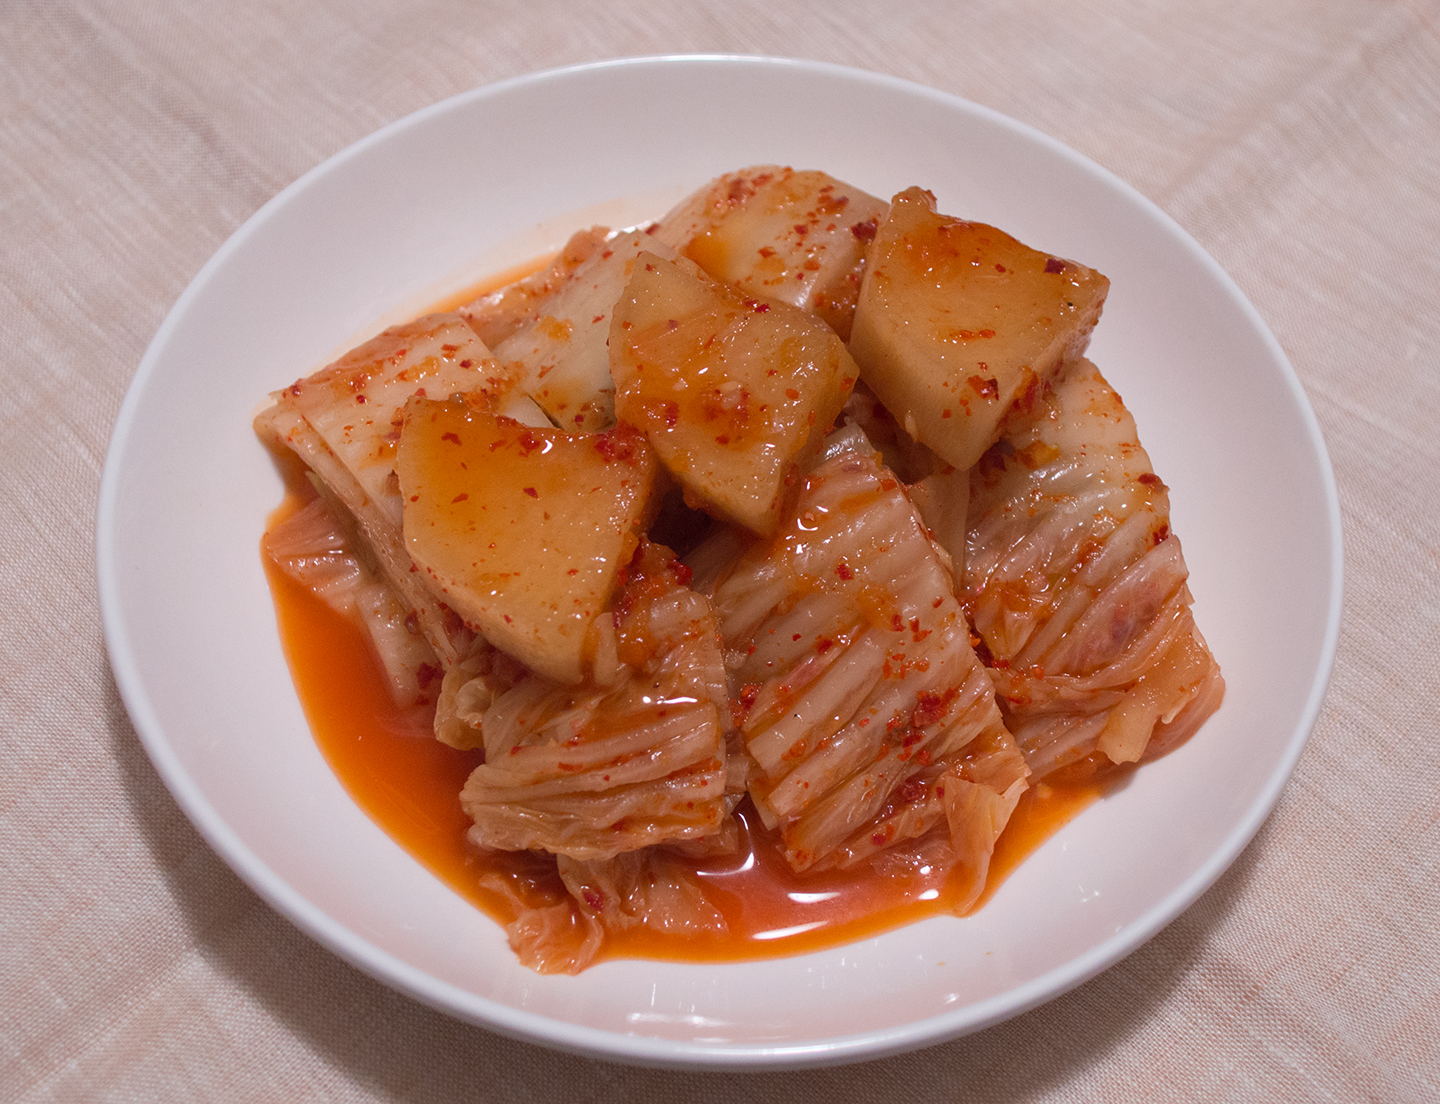 Napa Cabbage Kimchi (Authentic & Delicious!) - That Cute Dish!